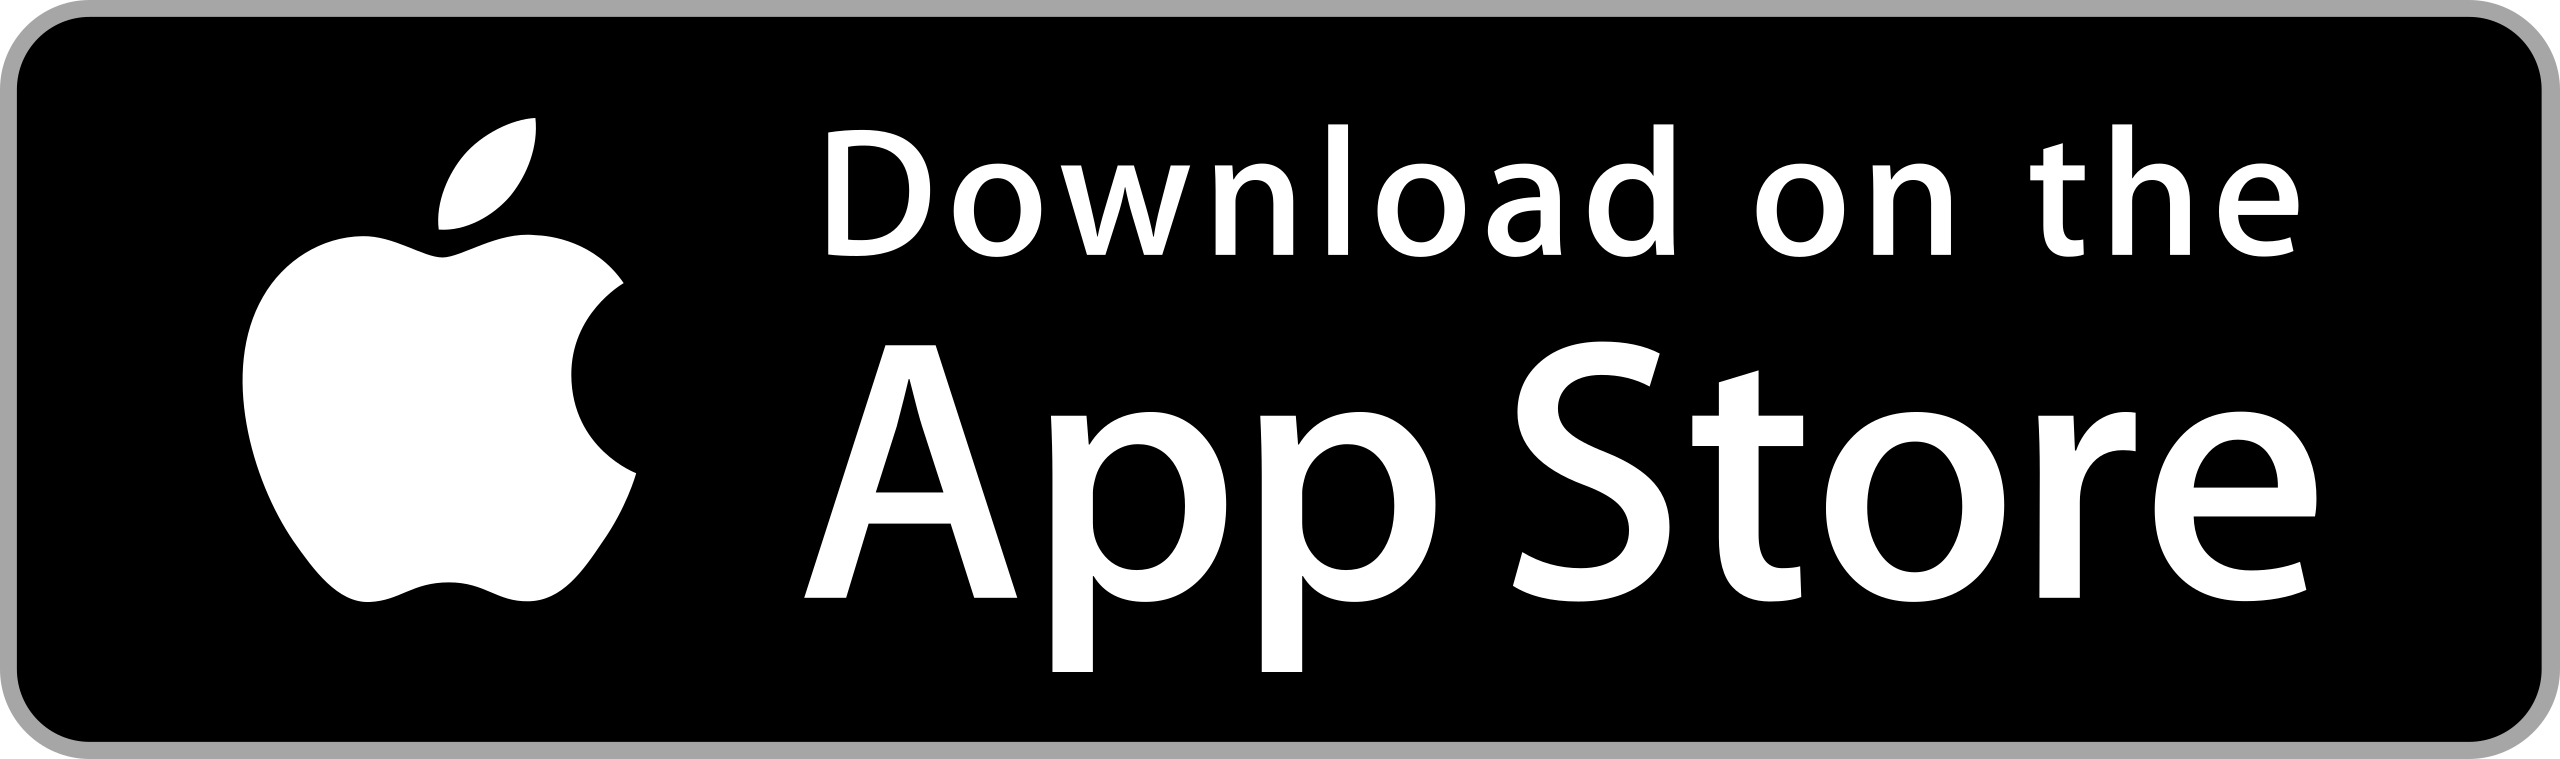 Download & Register the Citylink Shuttle App, Kuwait Mobility Service 3